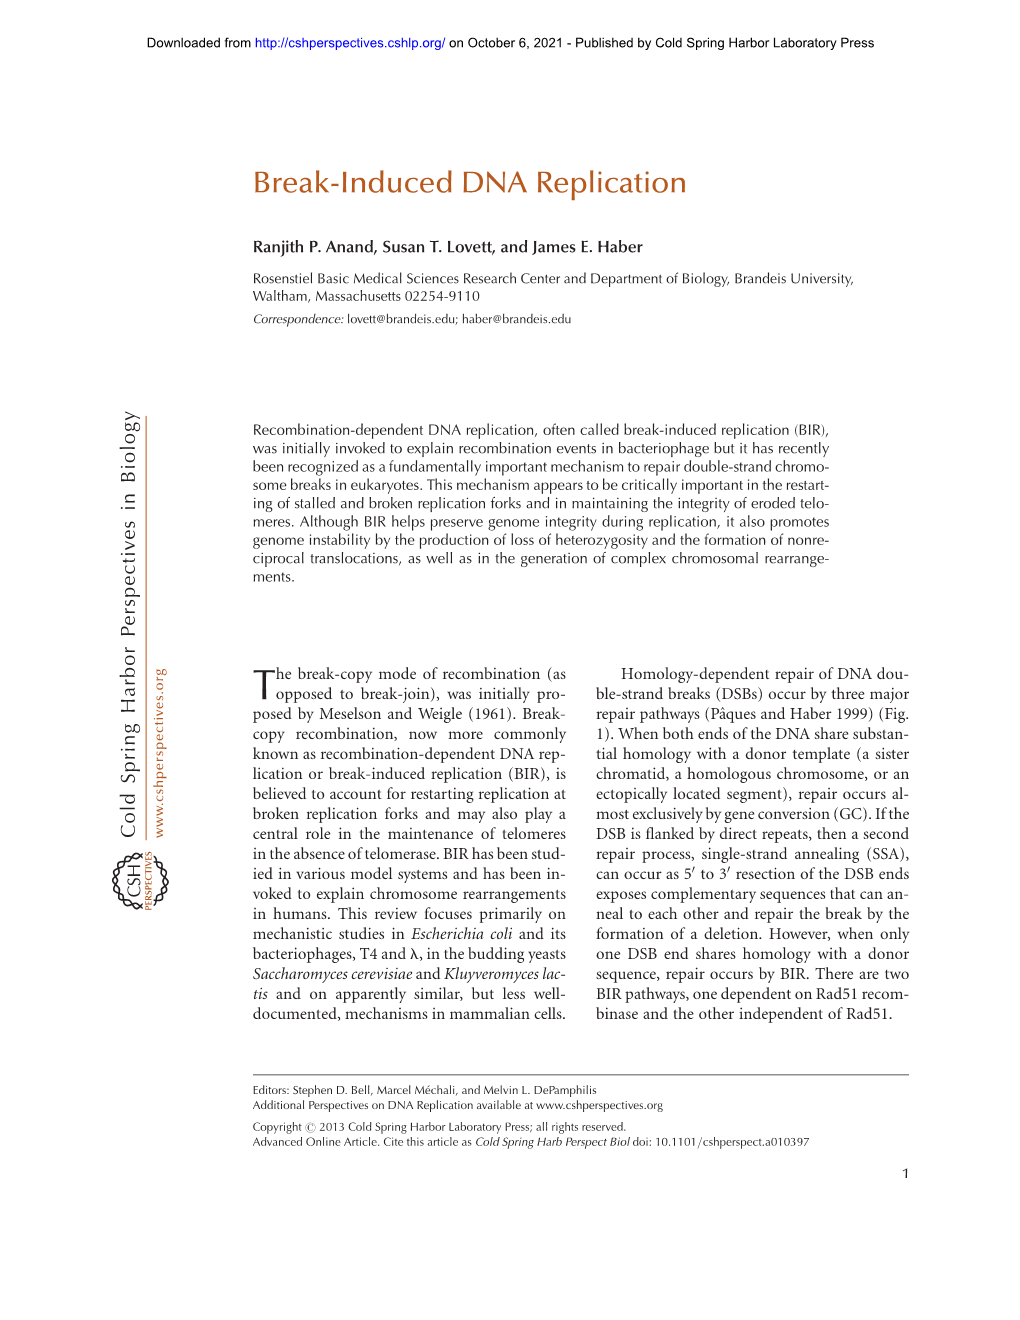 Break-Induced DNA Replication